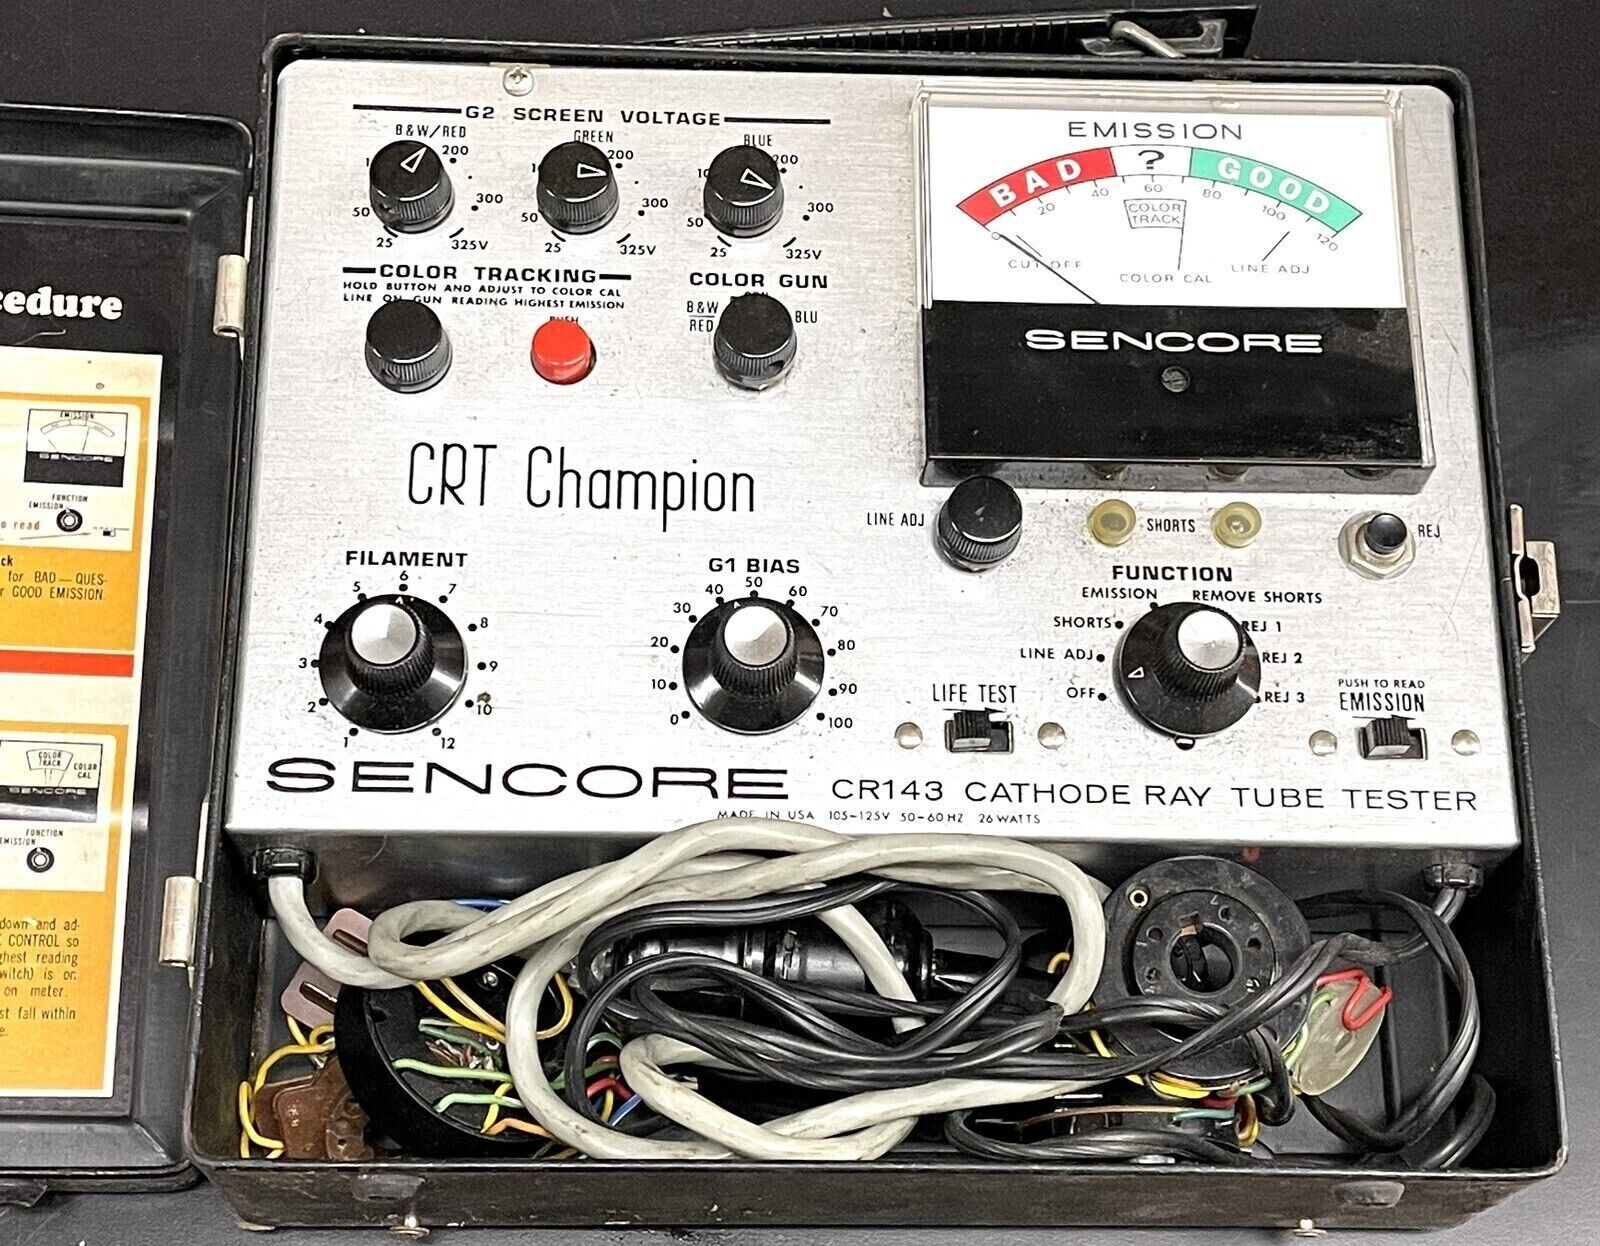 Sencore CRT Champion CR143 Cathode Ray Tube Tester